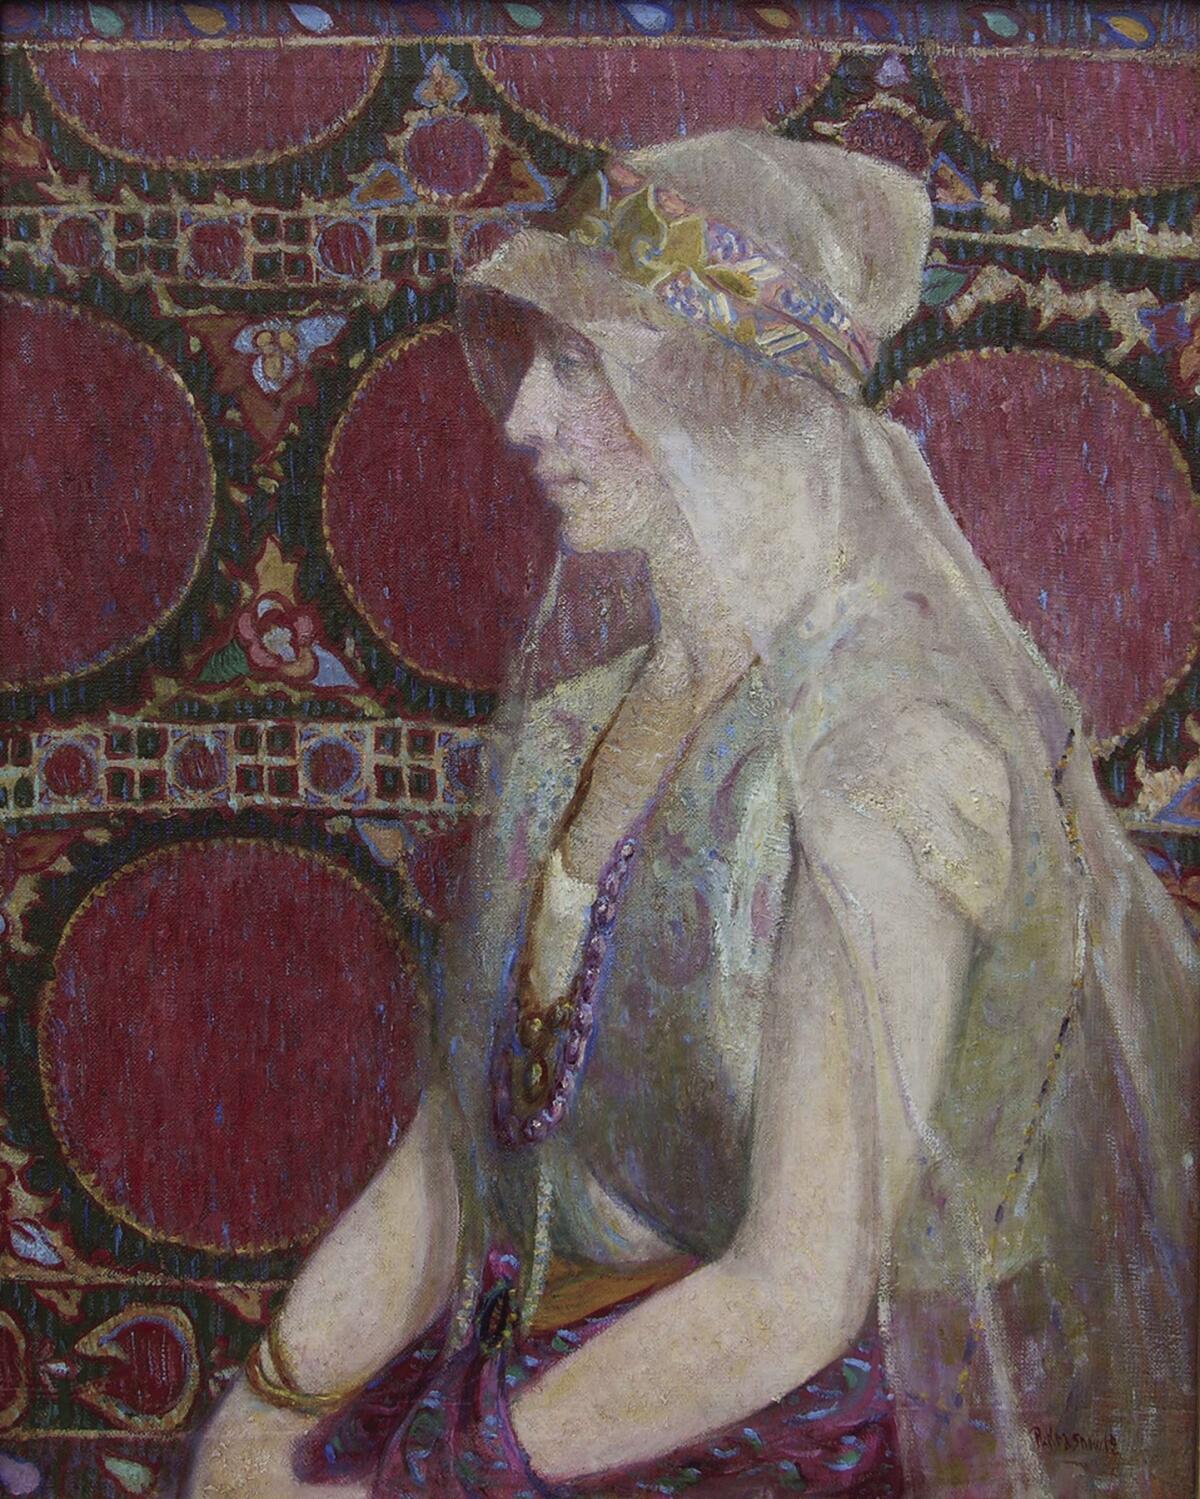 Peter Krasnow, "Portrait of a Woman," 1919, oil on canvas (Laguna Art Museum)